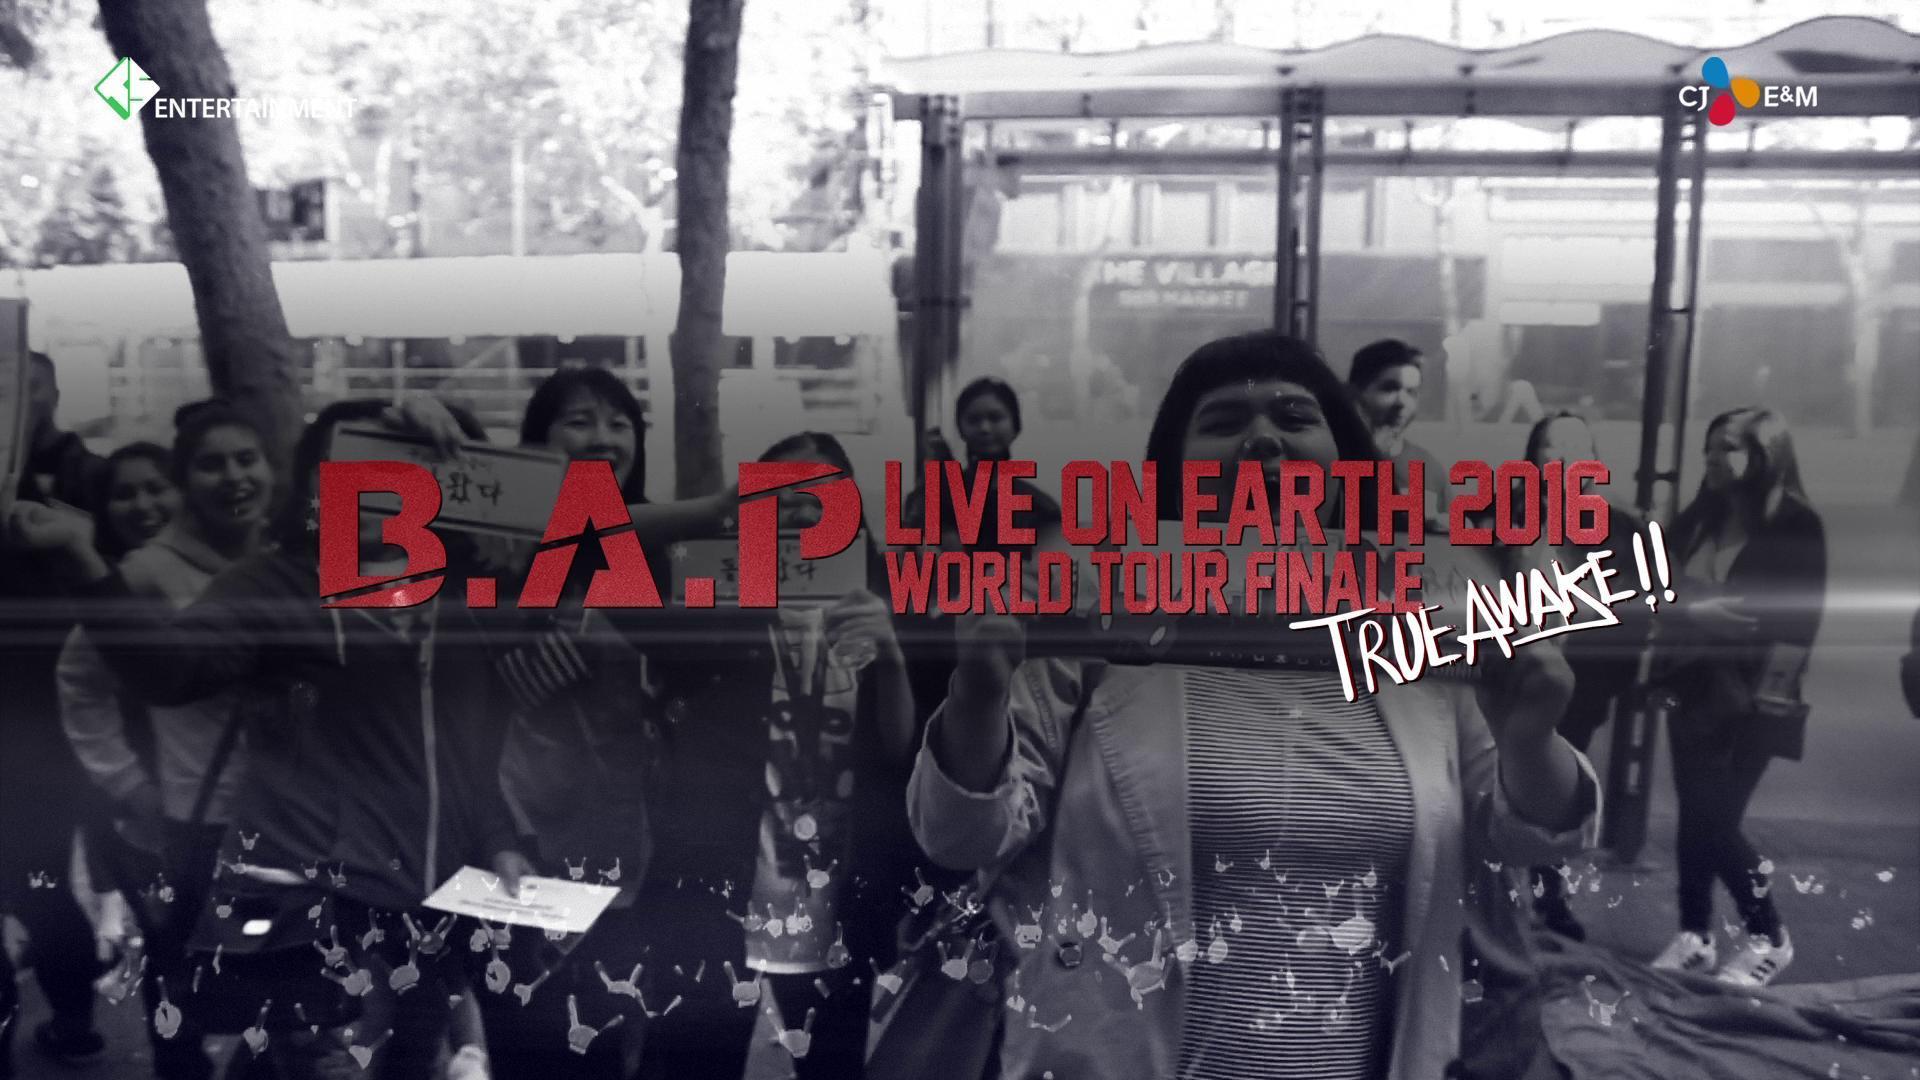 B.A.P LIVE ON EARTH 2016 WORLD TOUR FINALE [TRUE AWAKE!!] Trailer